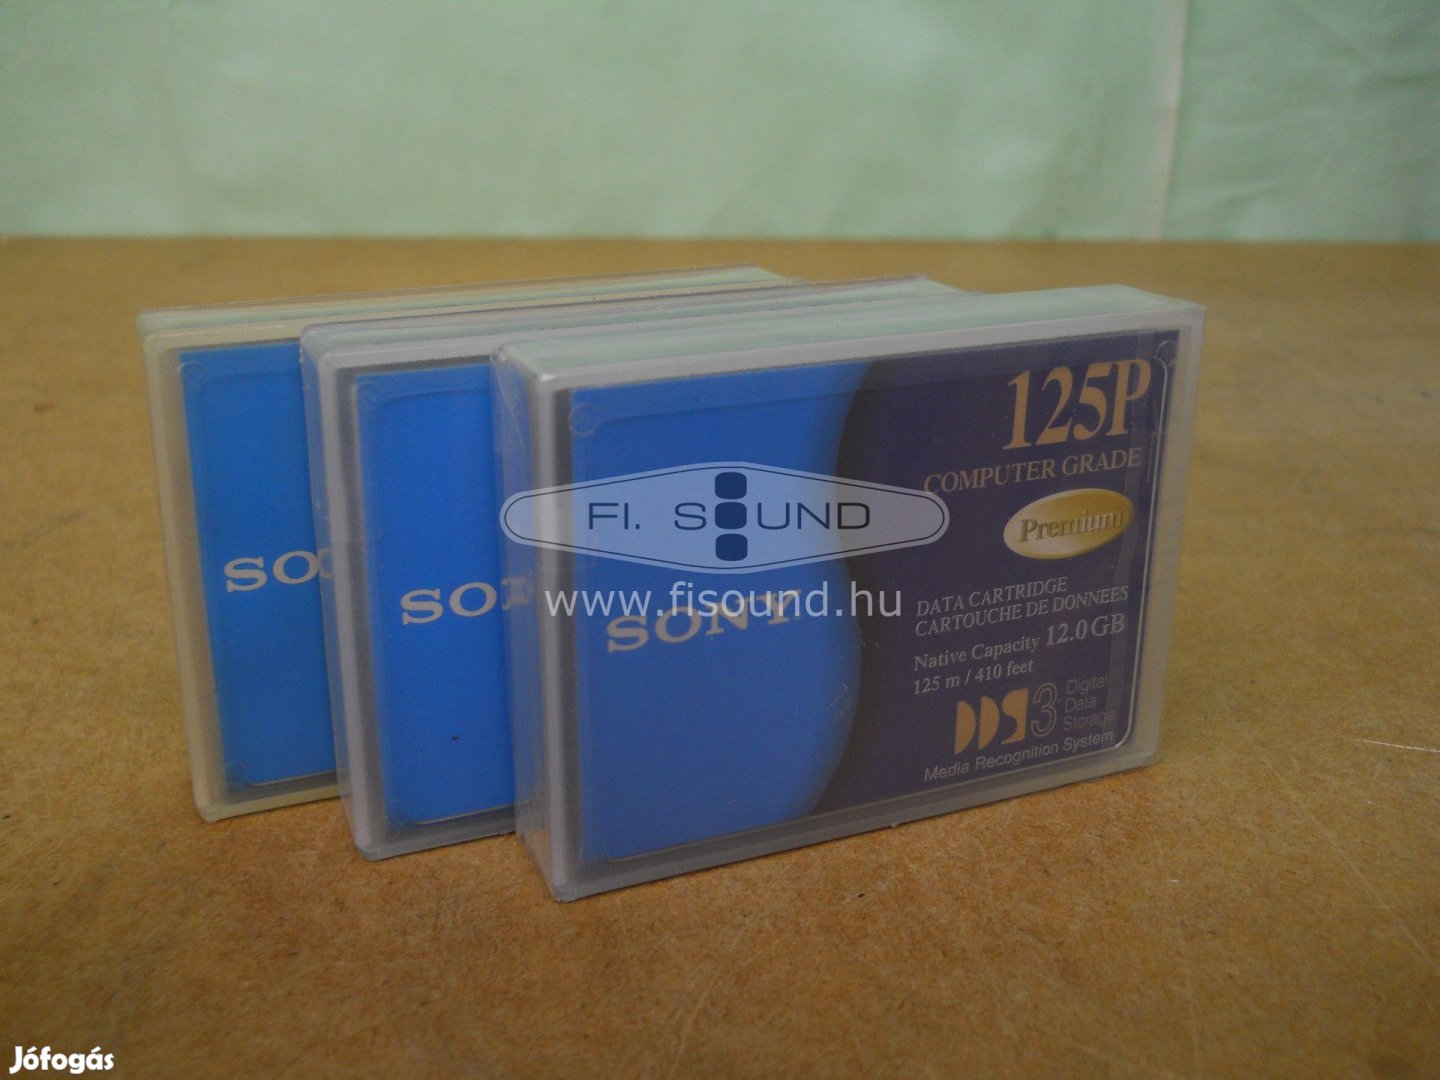 Sony Premium 125P, Digital Data kazetták